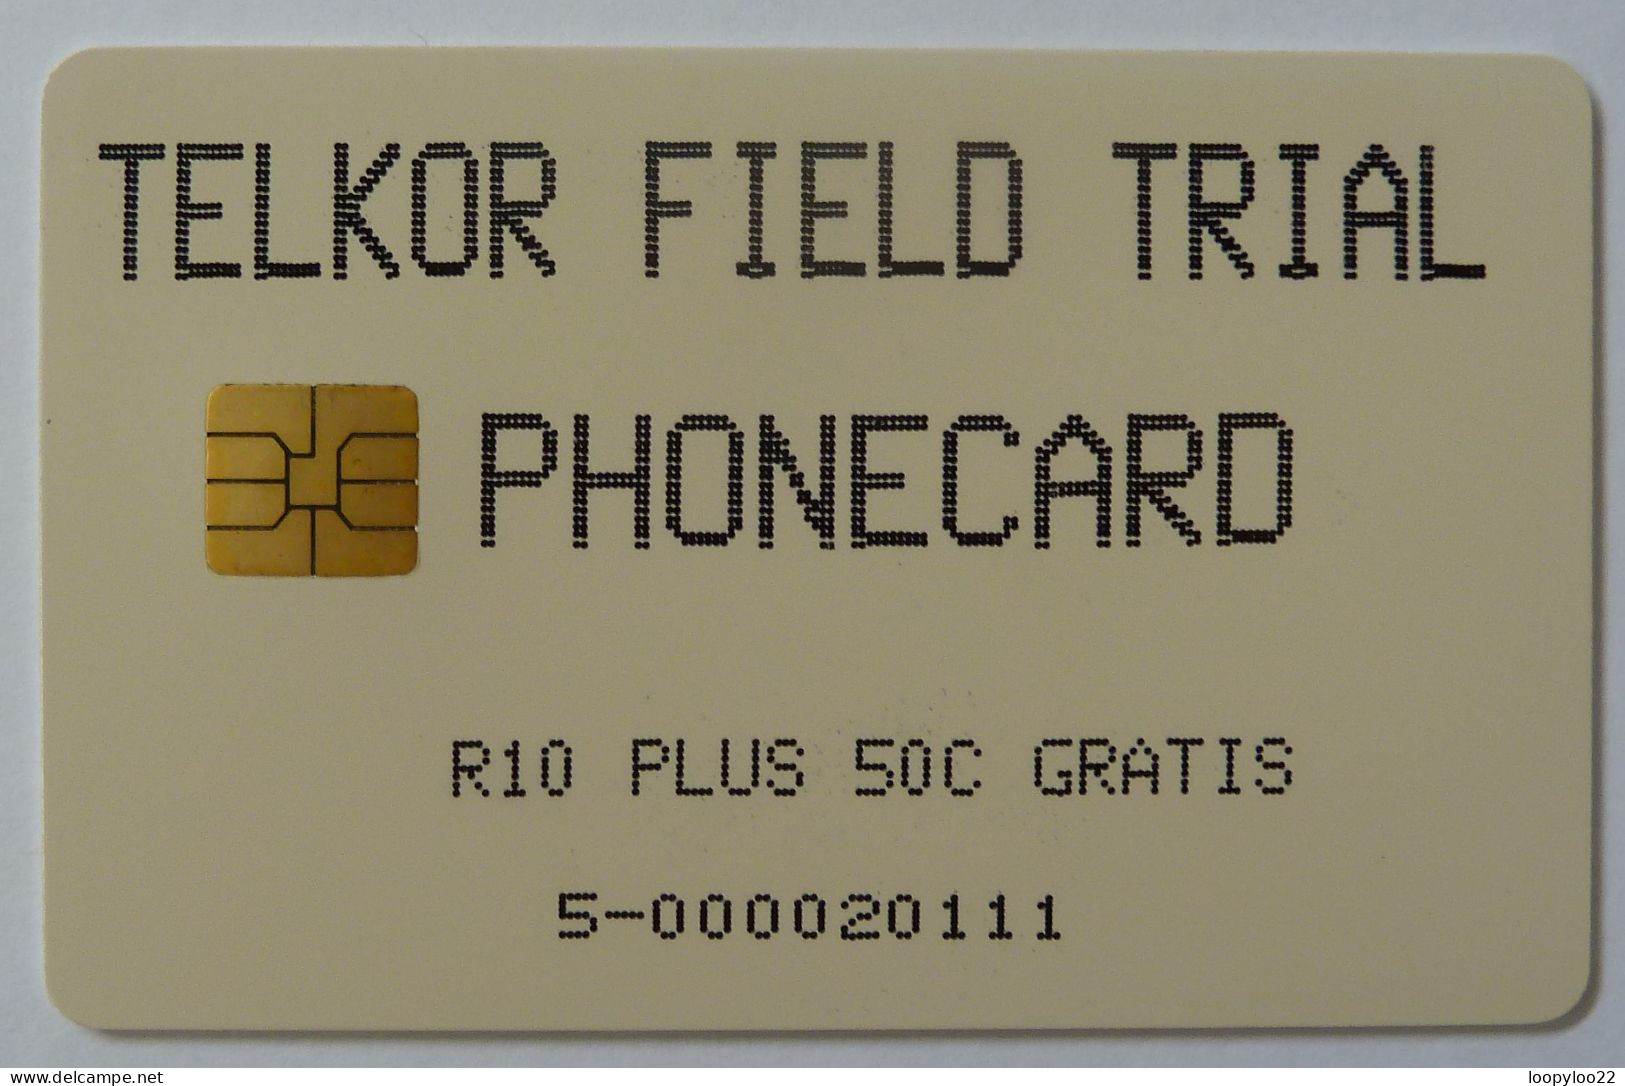 SOUTH AFRICA - Telkor Field Trial - R10 PLus 50c Gratis - 100ex - RRR - Südafrika